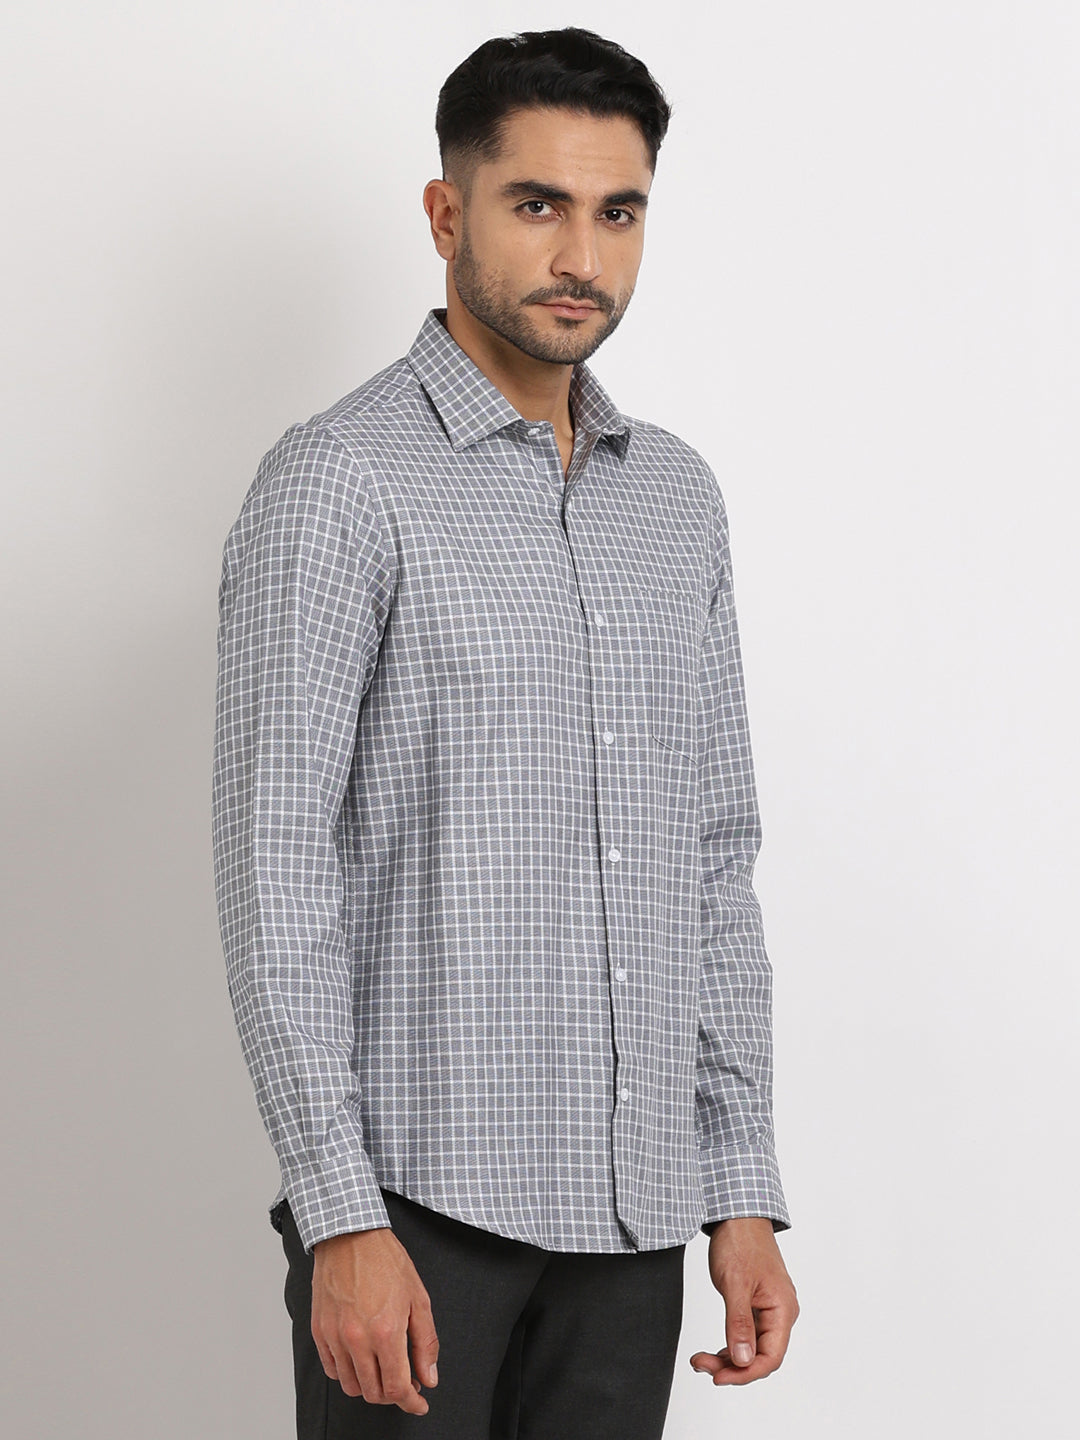 100% Cotton Grey Checkered Slim Fit Full Sleeve Formal Shirt